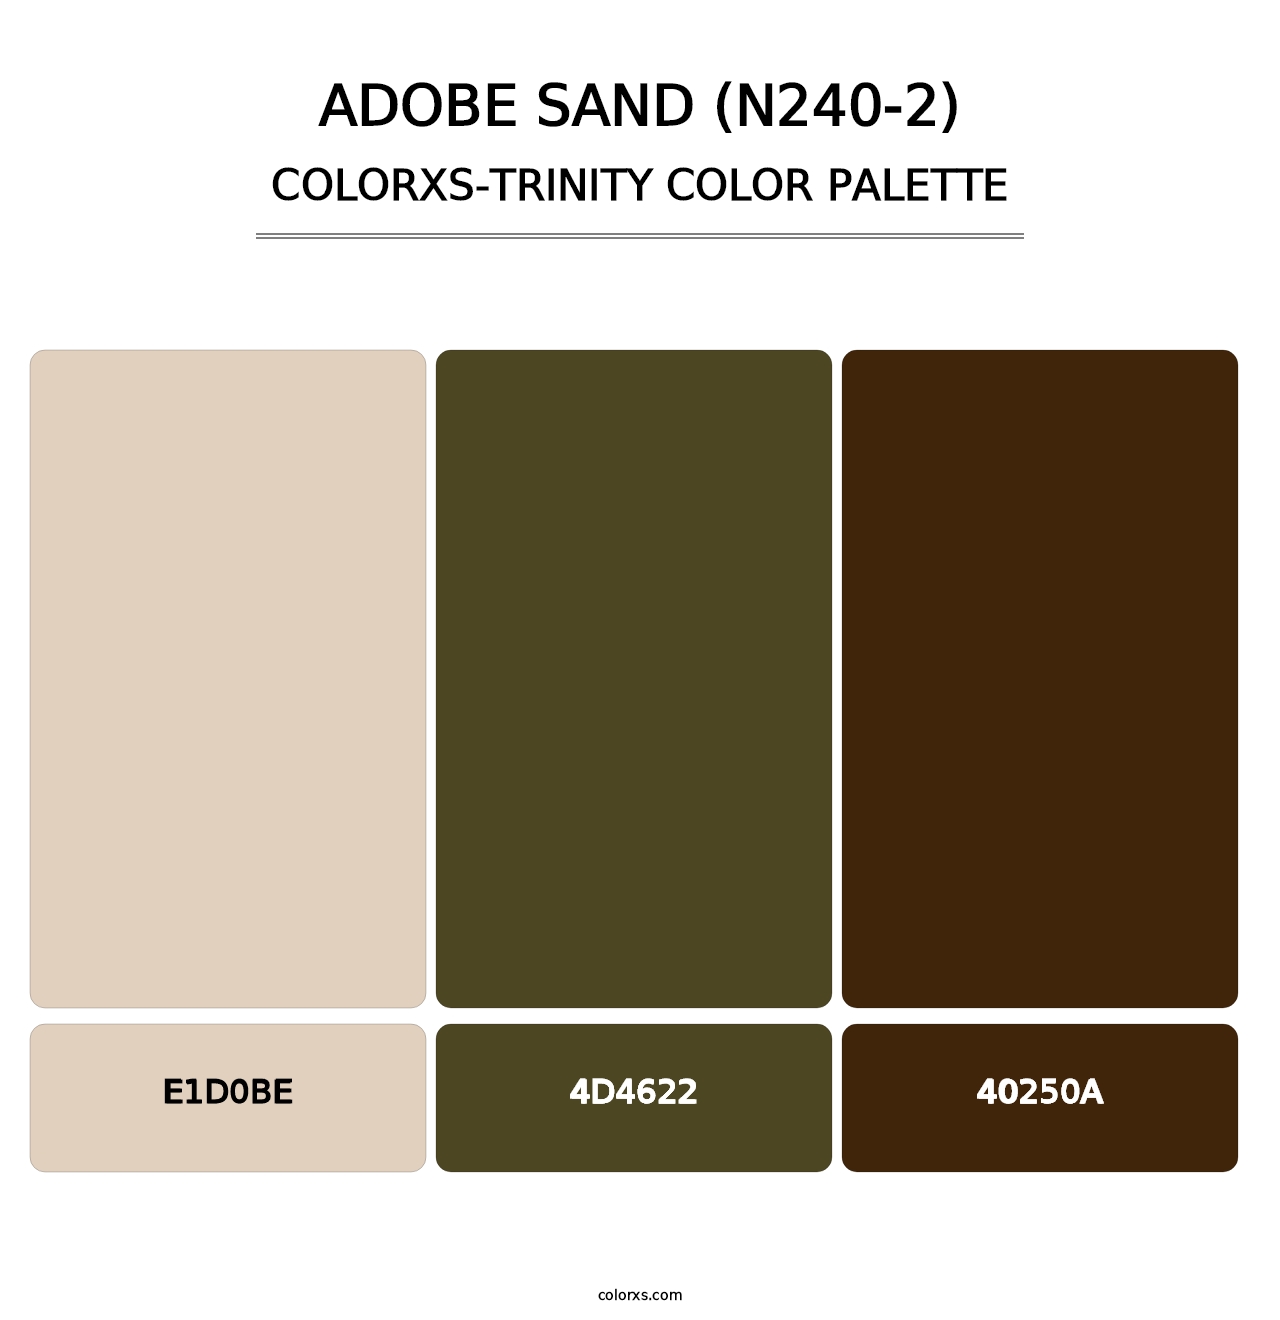 Adobe Sand (N240-2) - Colorxs Trinity Palette